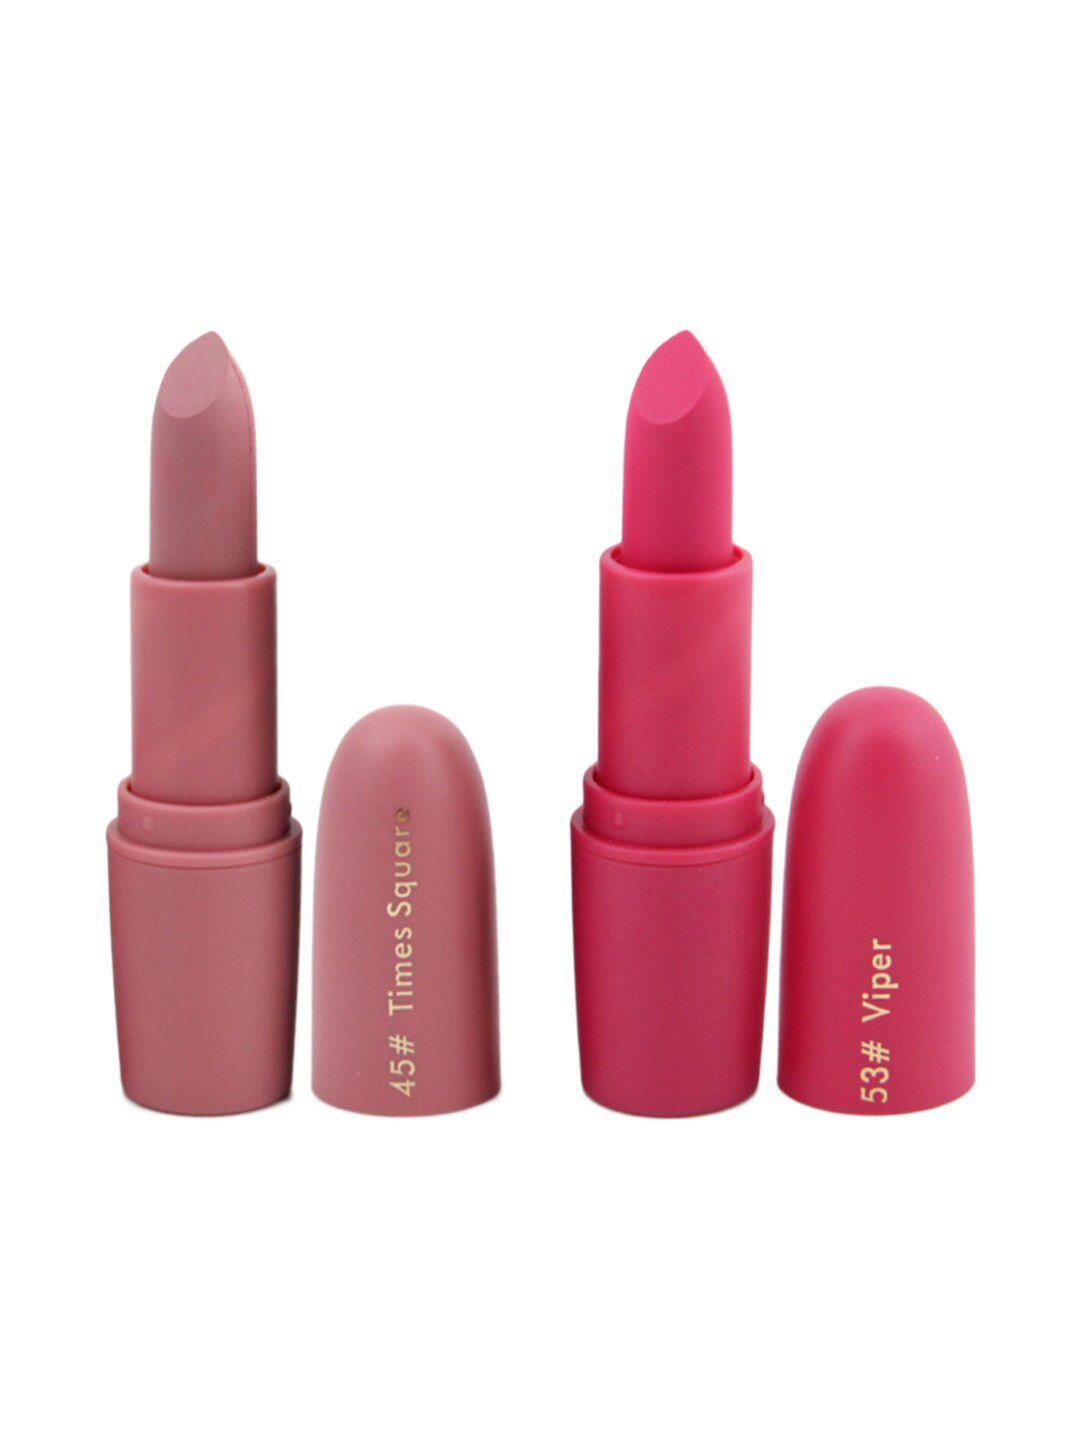 miss rose set of 2 matte creamy lipsticks - viper 53 & times square 45